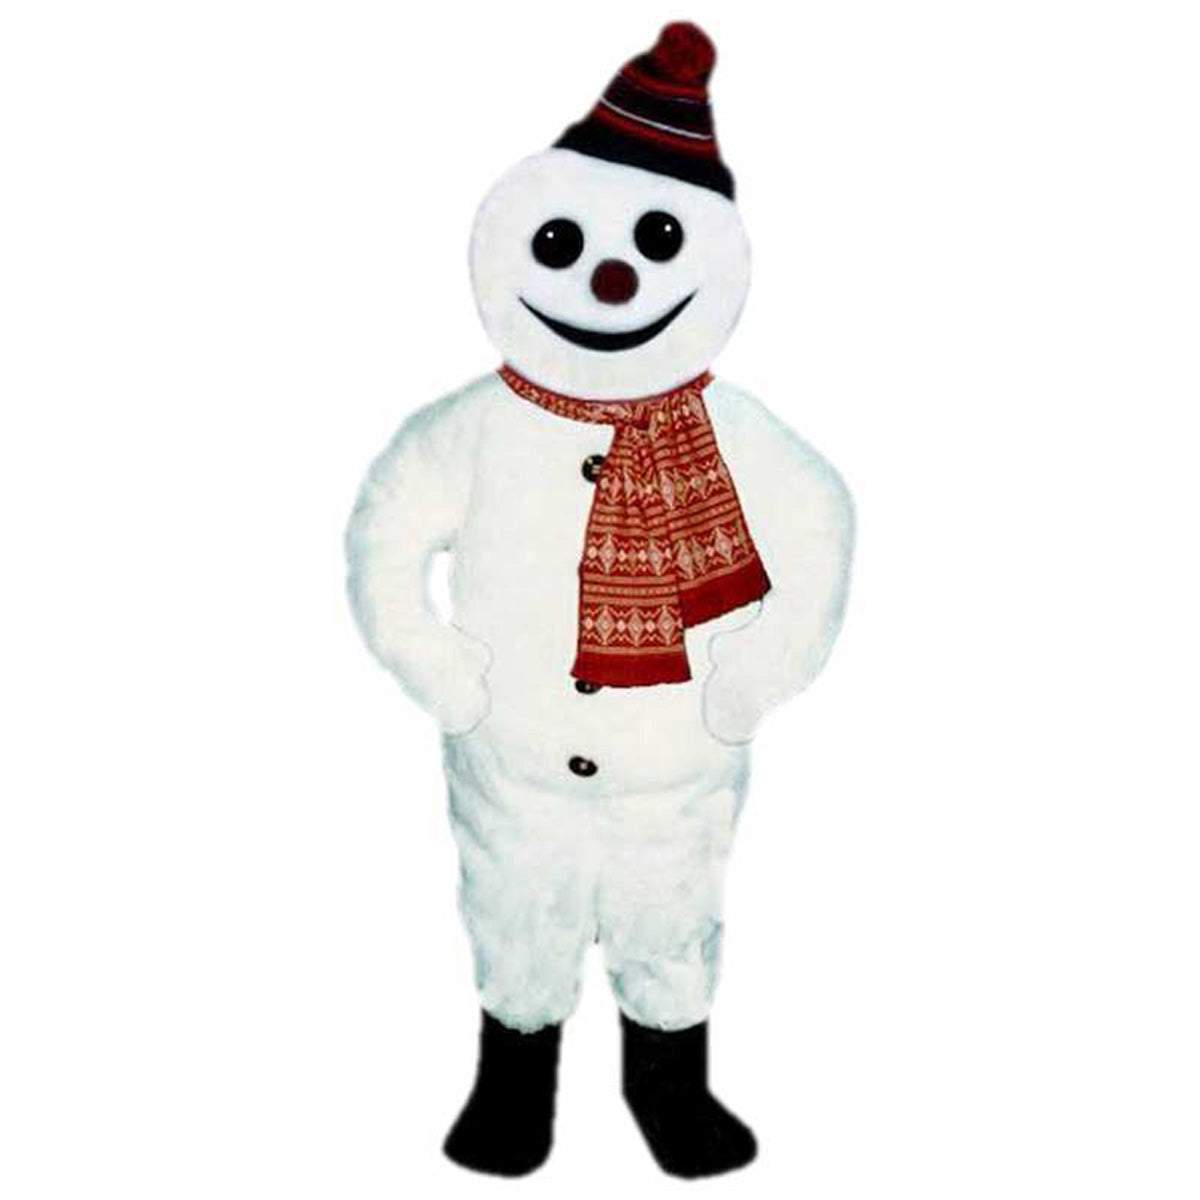 Smiling Snowman Mascot - Sales  Waver Mascot Costume Adult Size Mascotte Mascota Carnival Party Cosplay Costume Fancy Dress Suit - Mascot Costume by FurryMascot - ANIMAL MASCOT, CARTOON MASCOT, Movie Mascot, SCHOOL & RESTAURANT